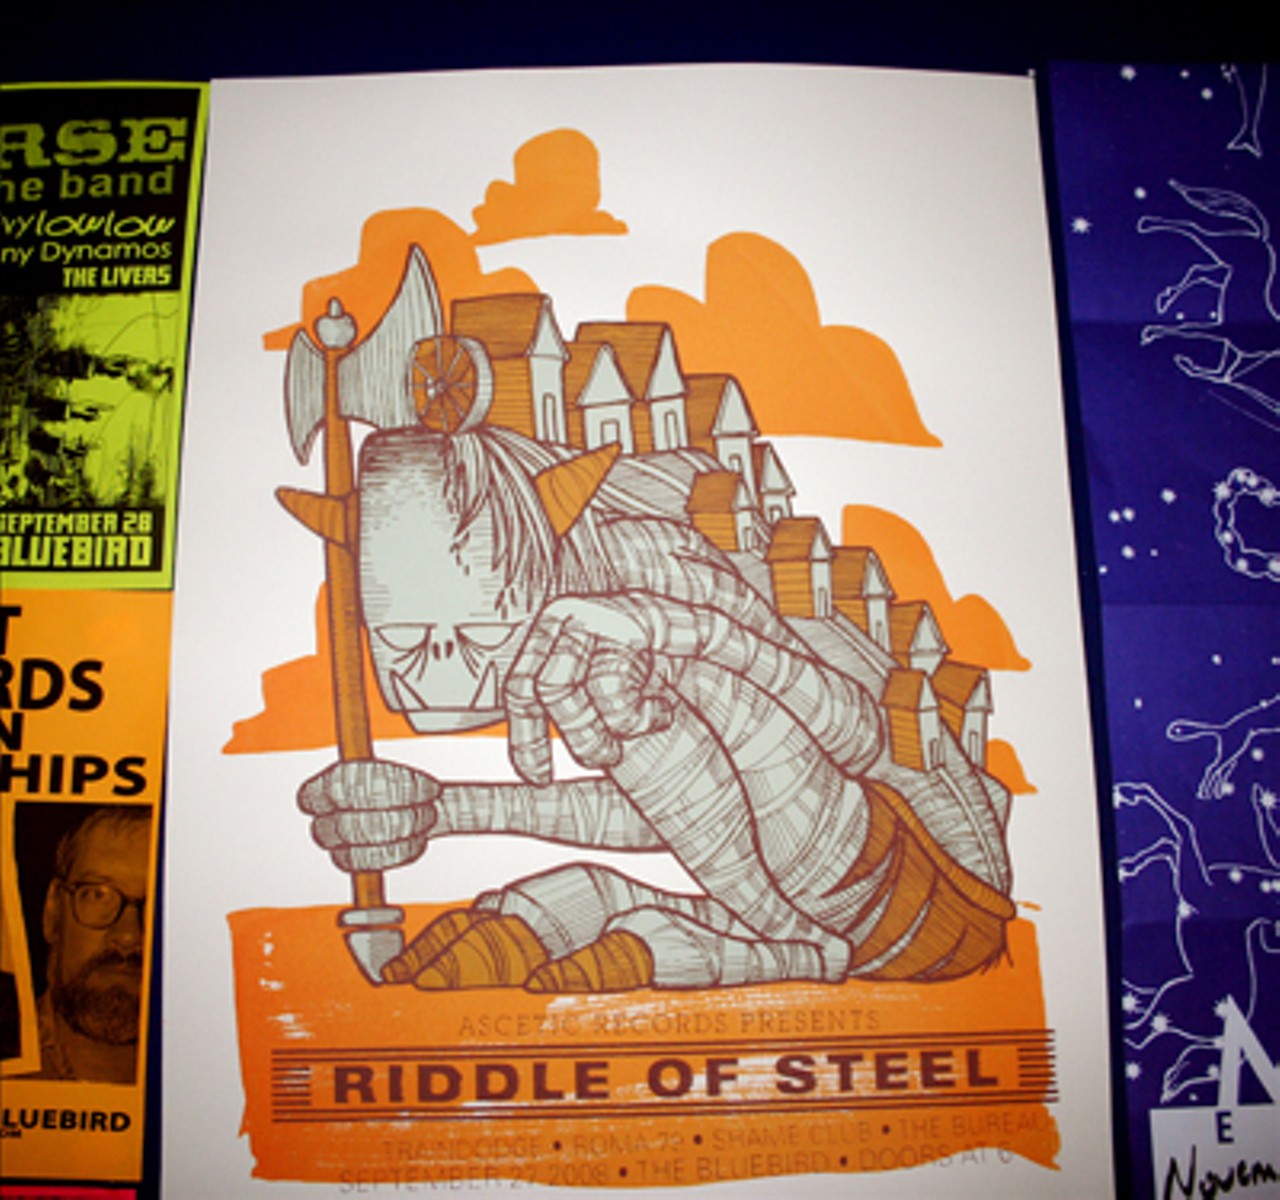 Riddle of Steel's "Final Rockdown" at Bluebird, 9/27/08